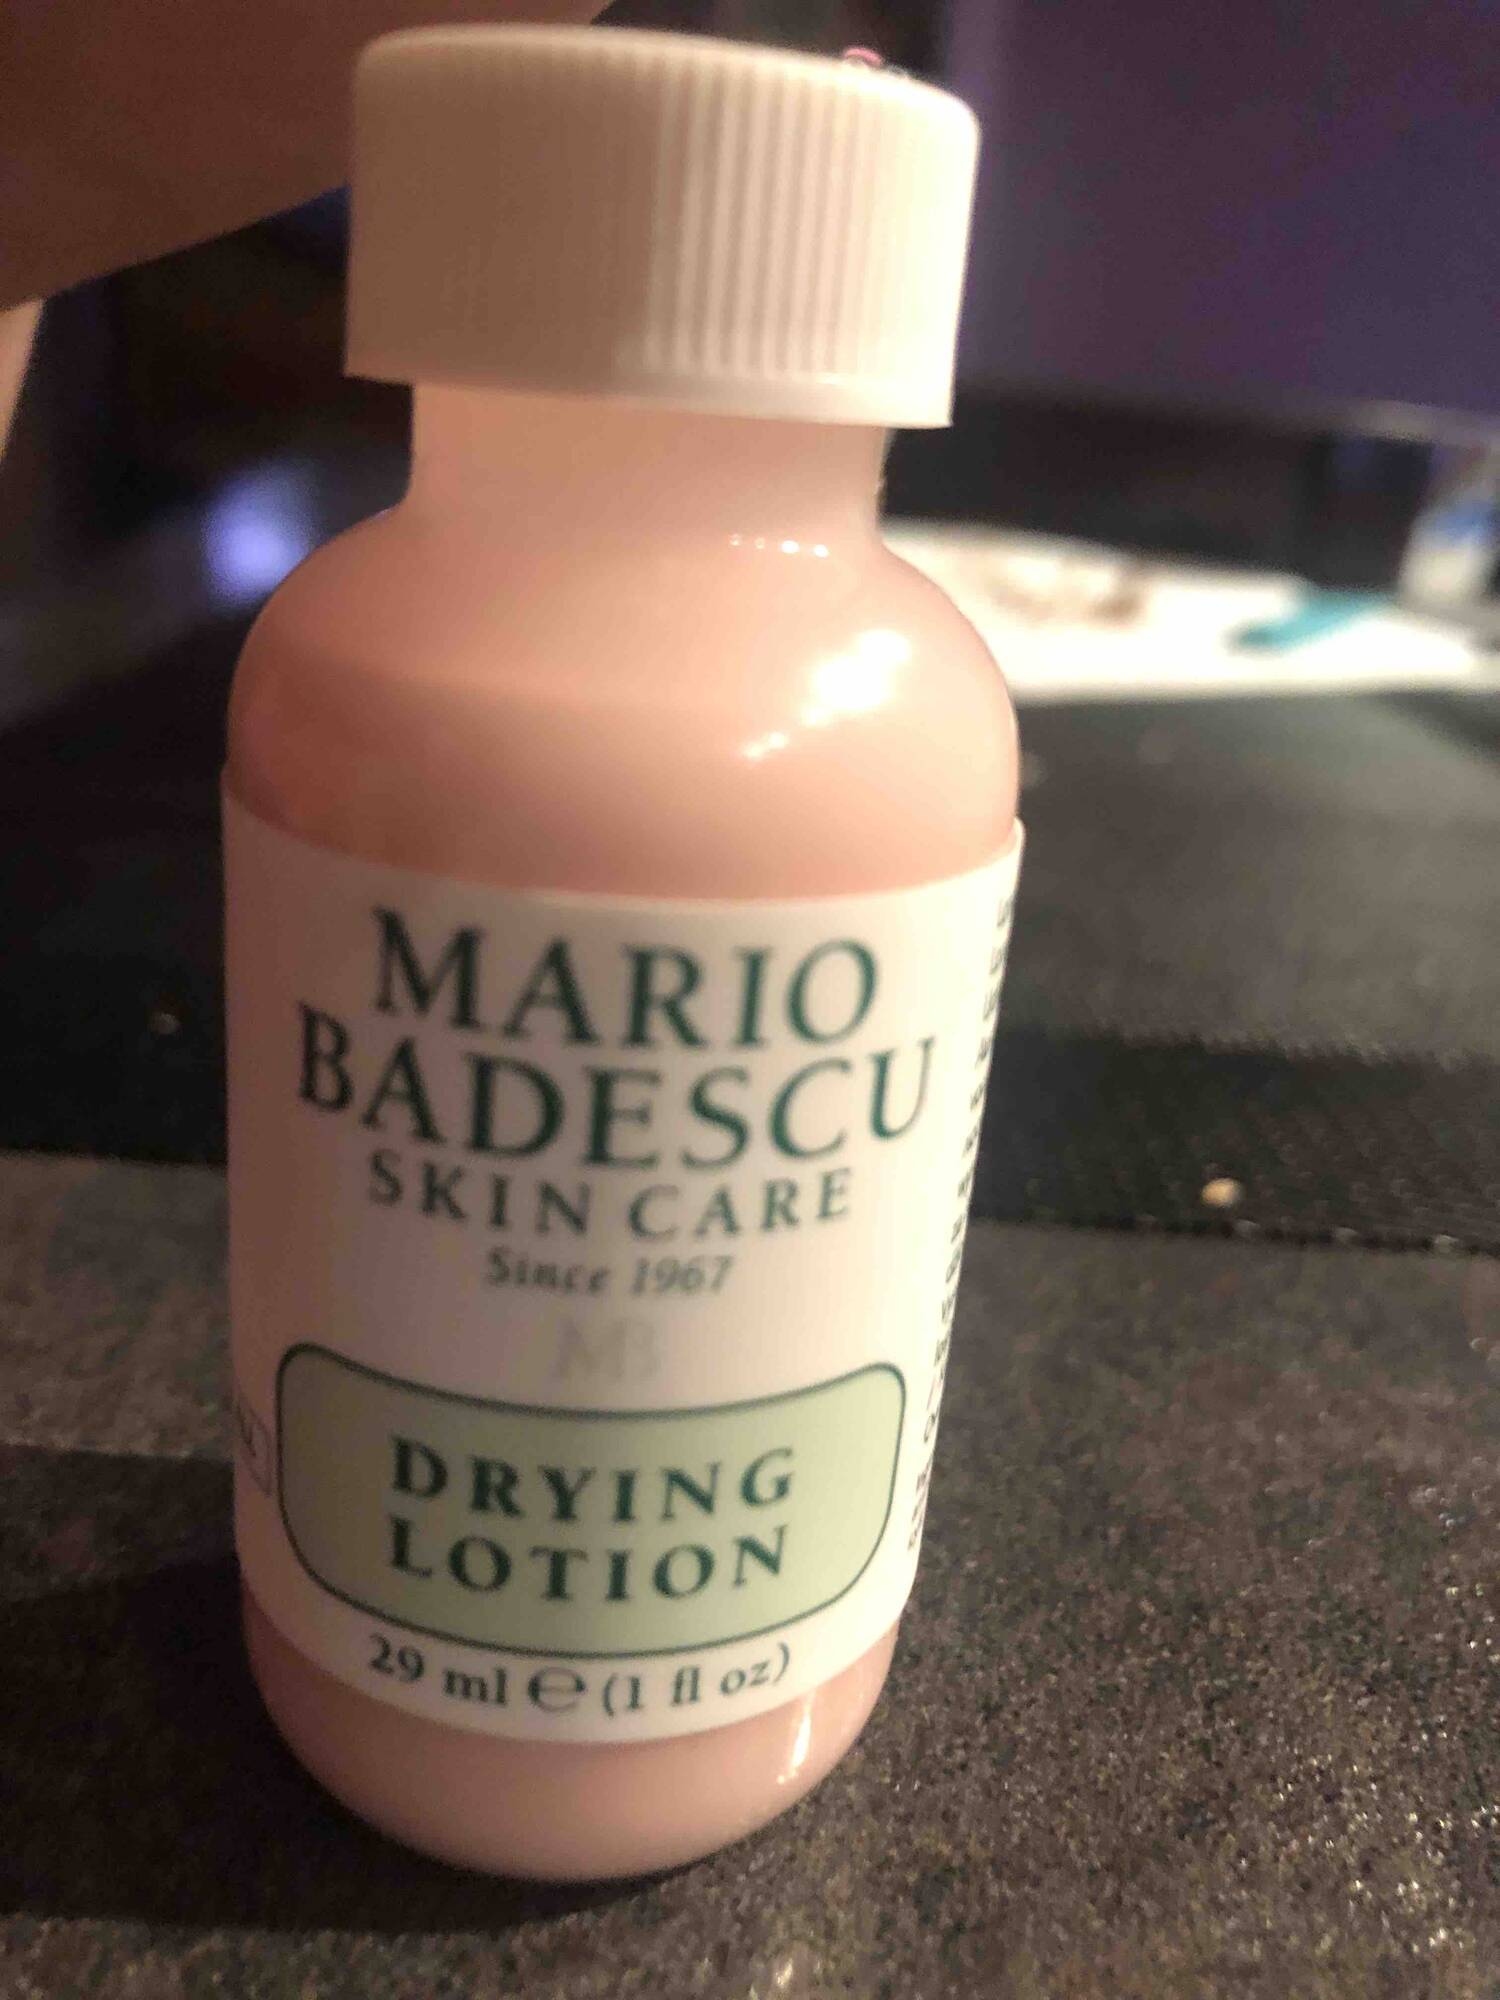 MARIO BADESCU - Skin care - Drying lotion